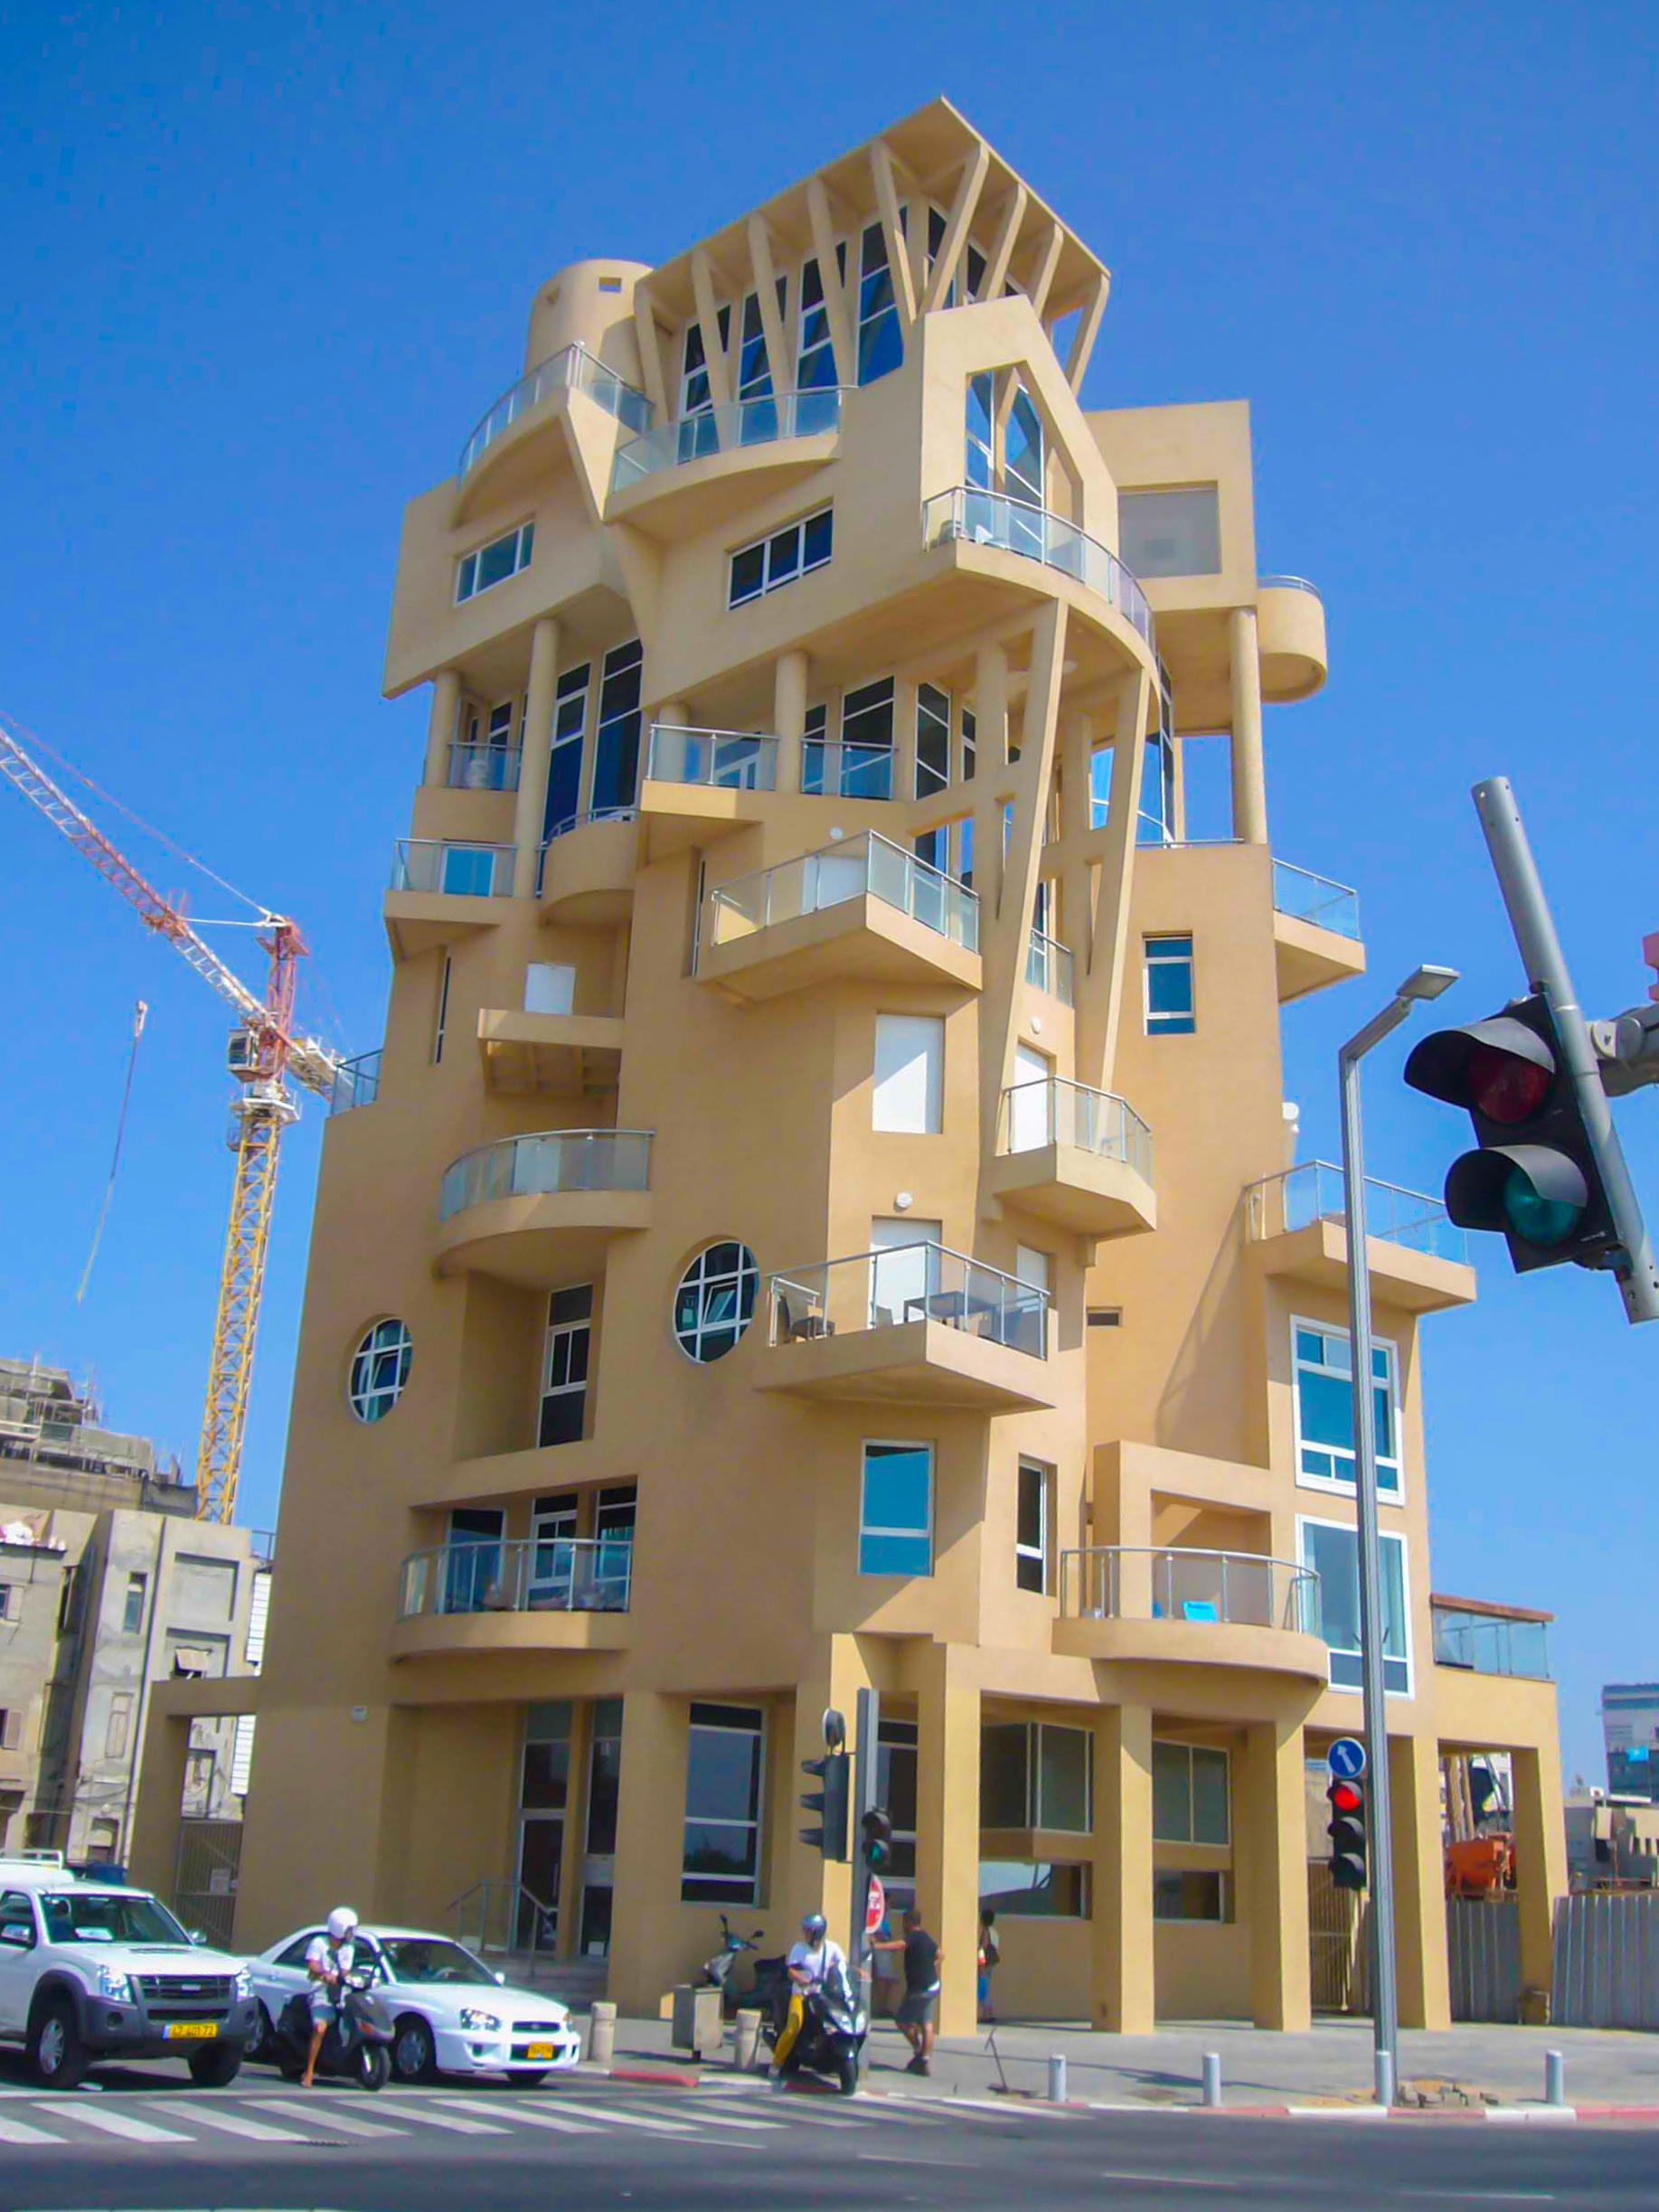 The ugly beach house (Foto: Happy in Tel-Aviv)